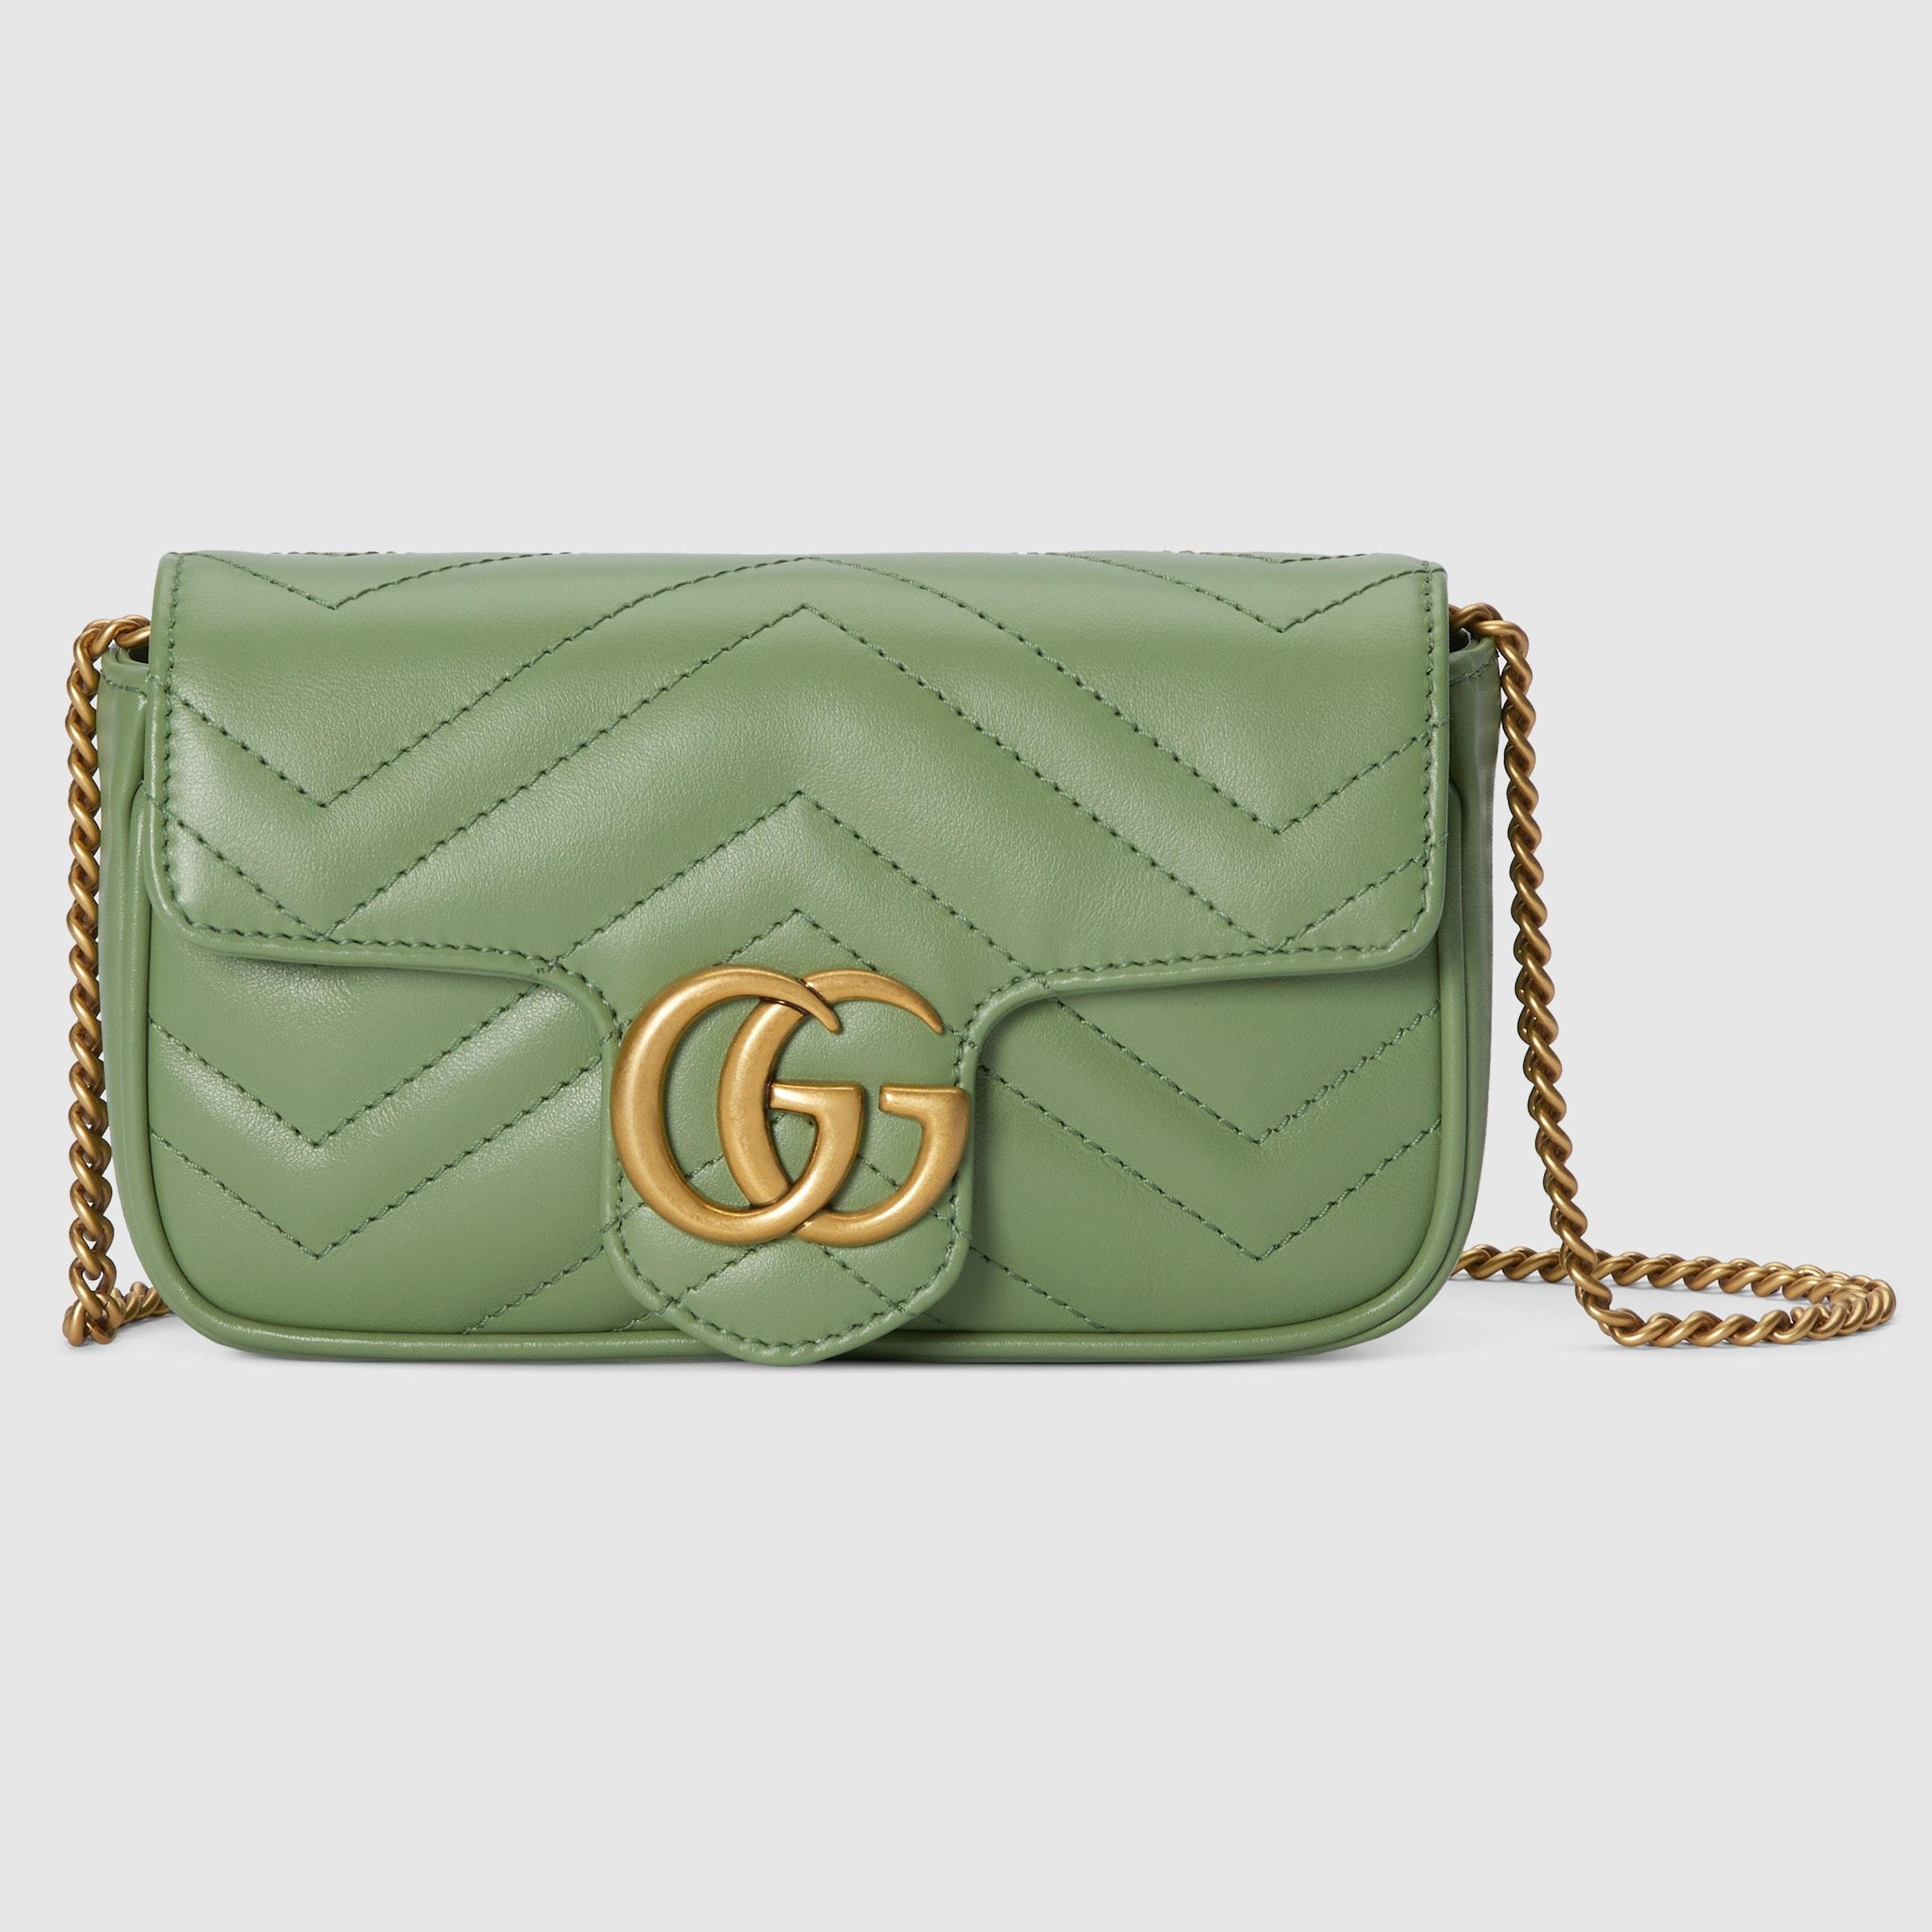 Gucci Mini Leather GG Marmont Shoulder Bag